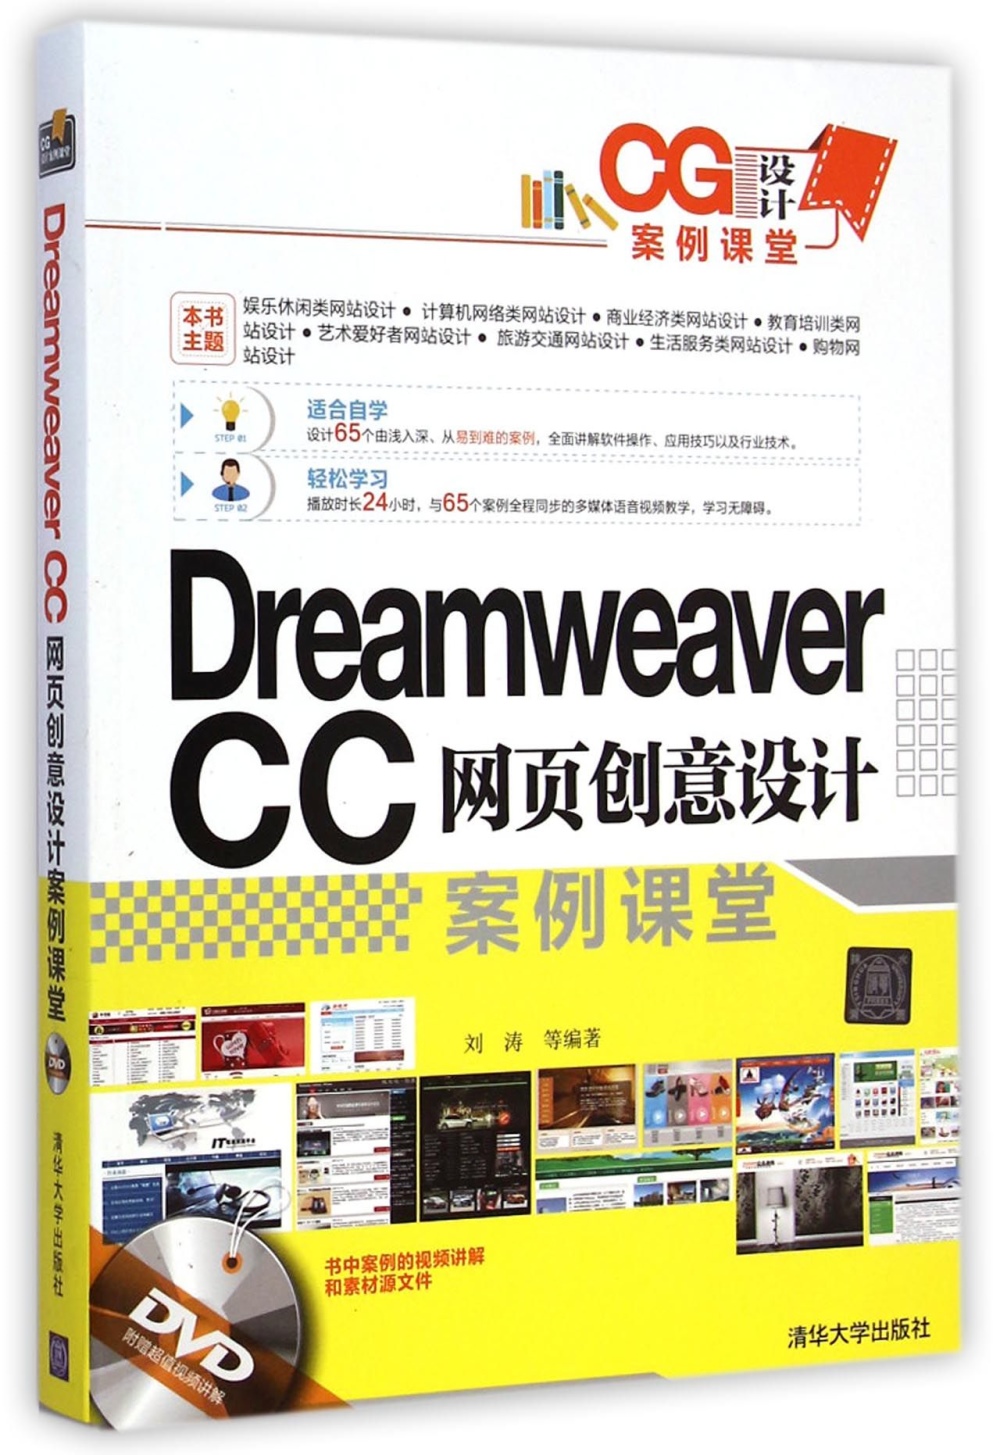 Dreamweaver CC網頁創意設計案例課堂